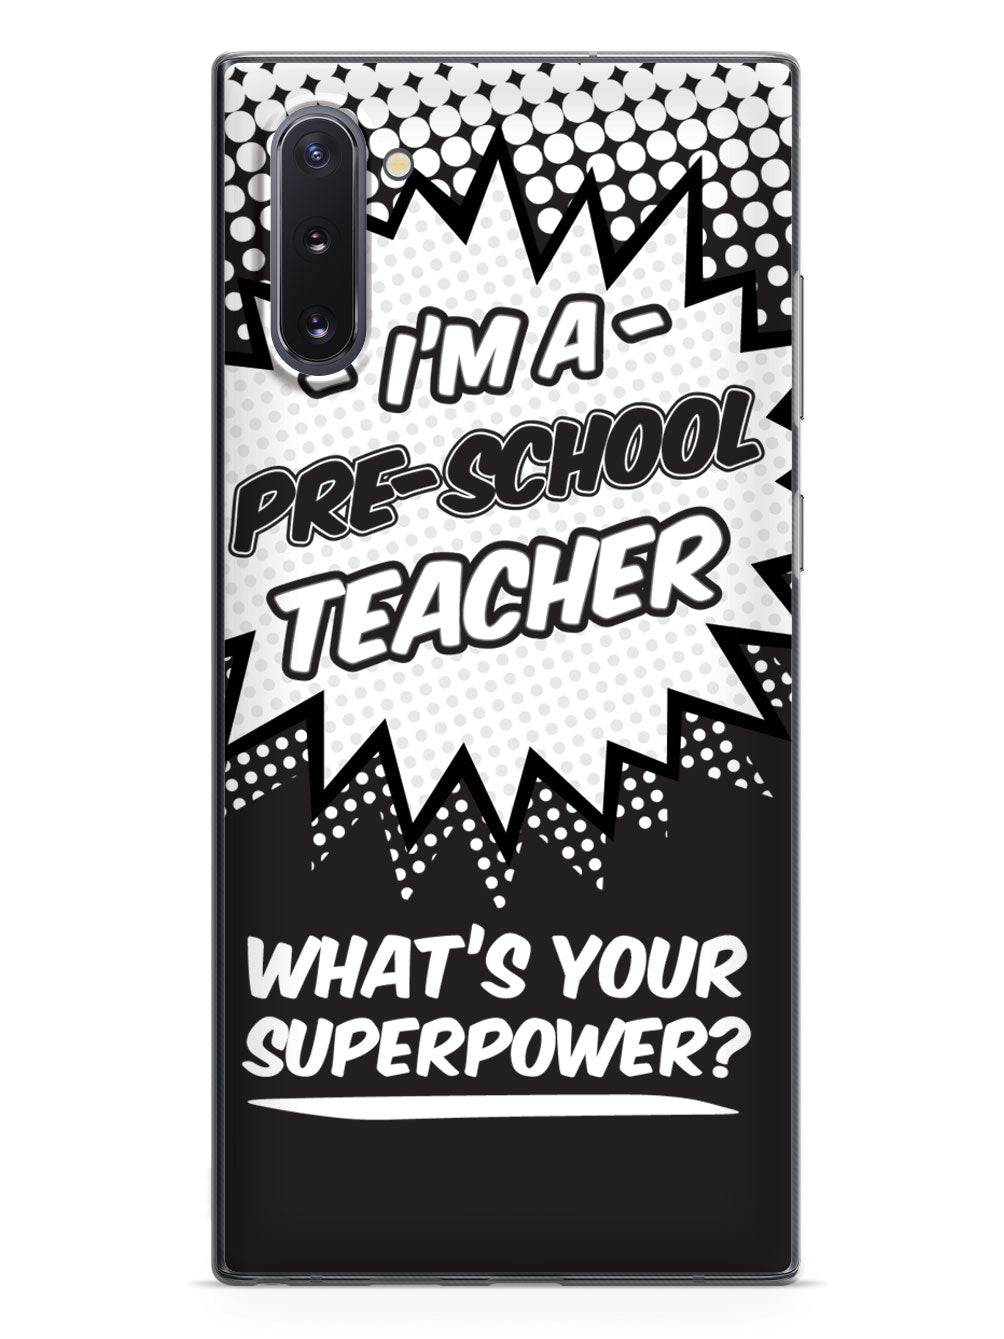 Pre-School Teacher - What's Your Superpower? Case